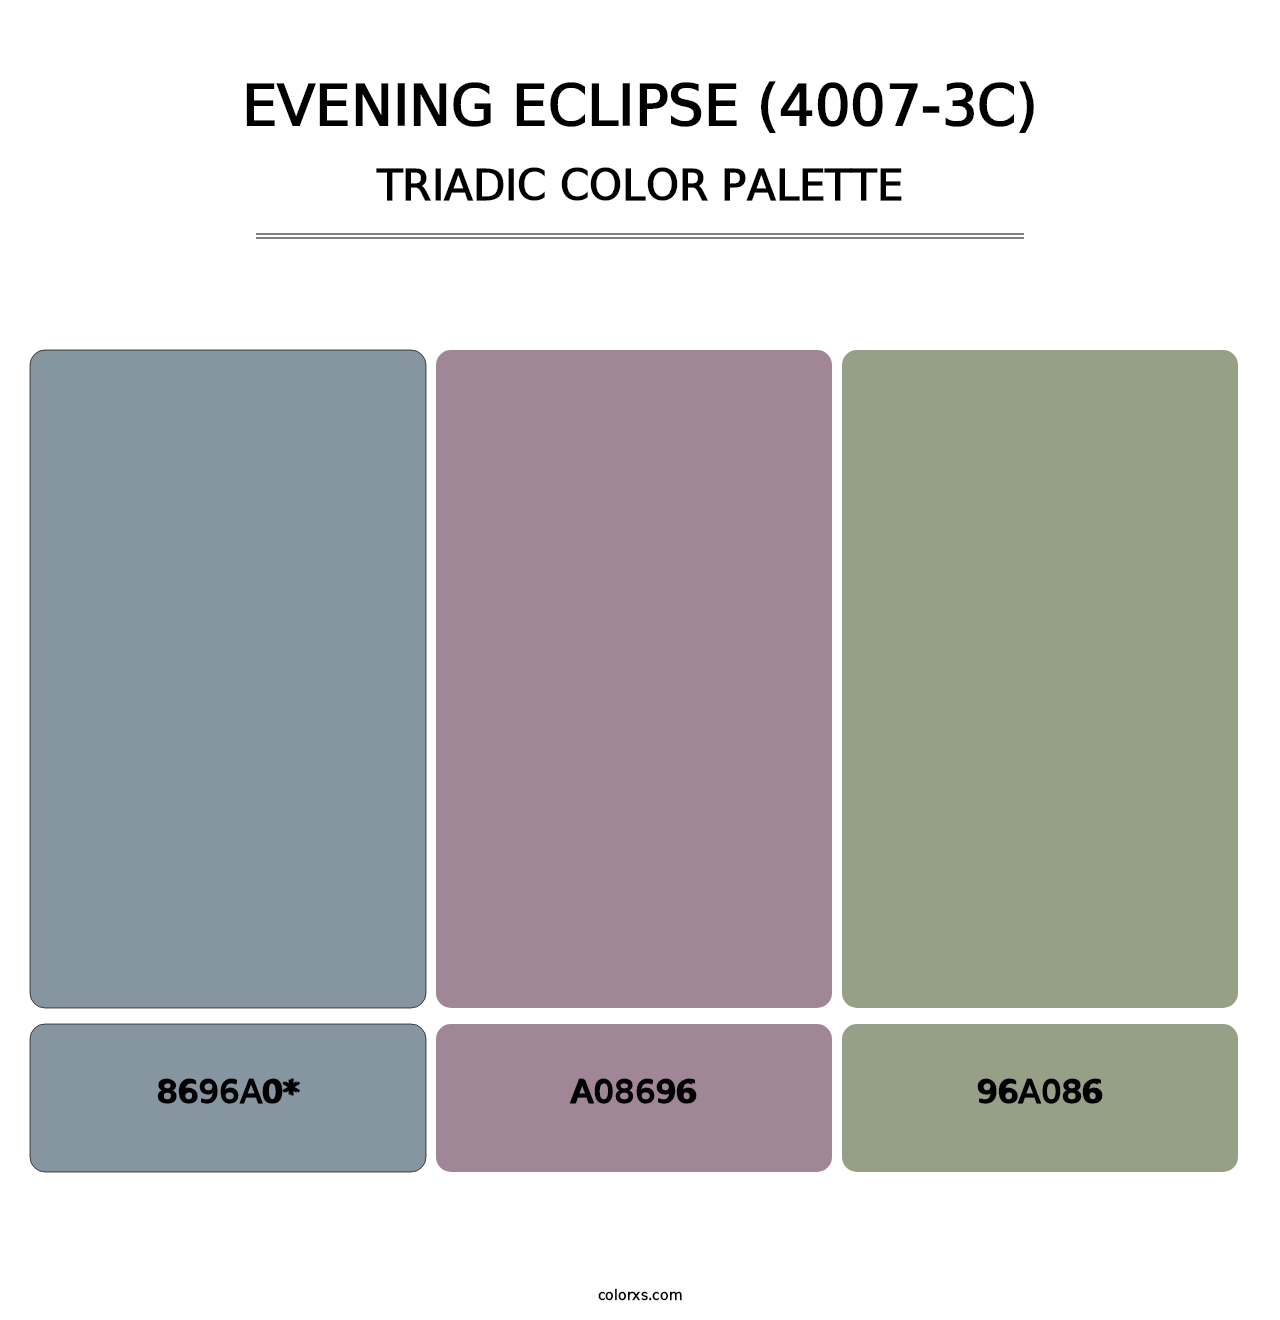 Evening Eclipse (4007-3C) - Triadic Color Palette